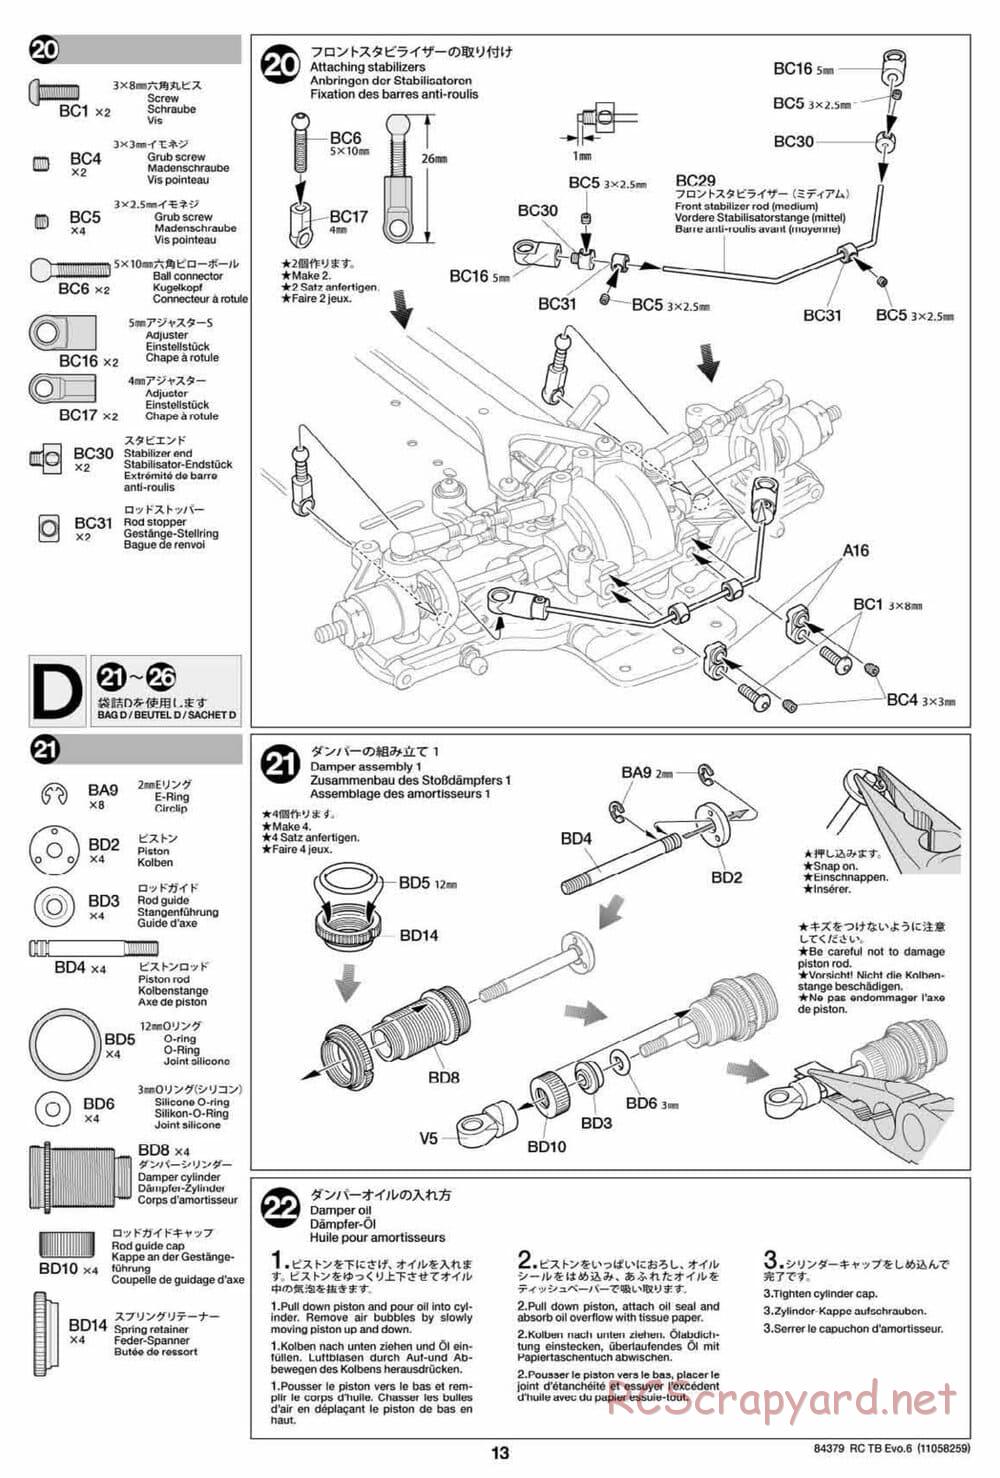 Tamiya - TB Evo.6 Chassis - Manual - Page 13